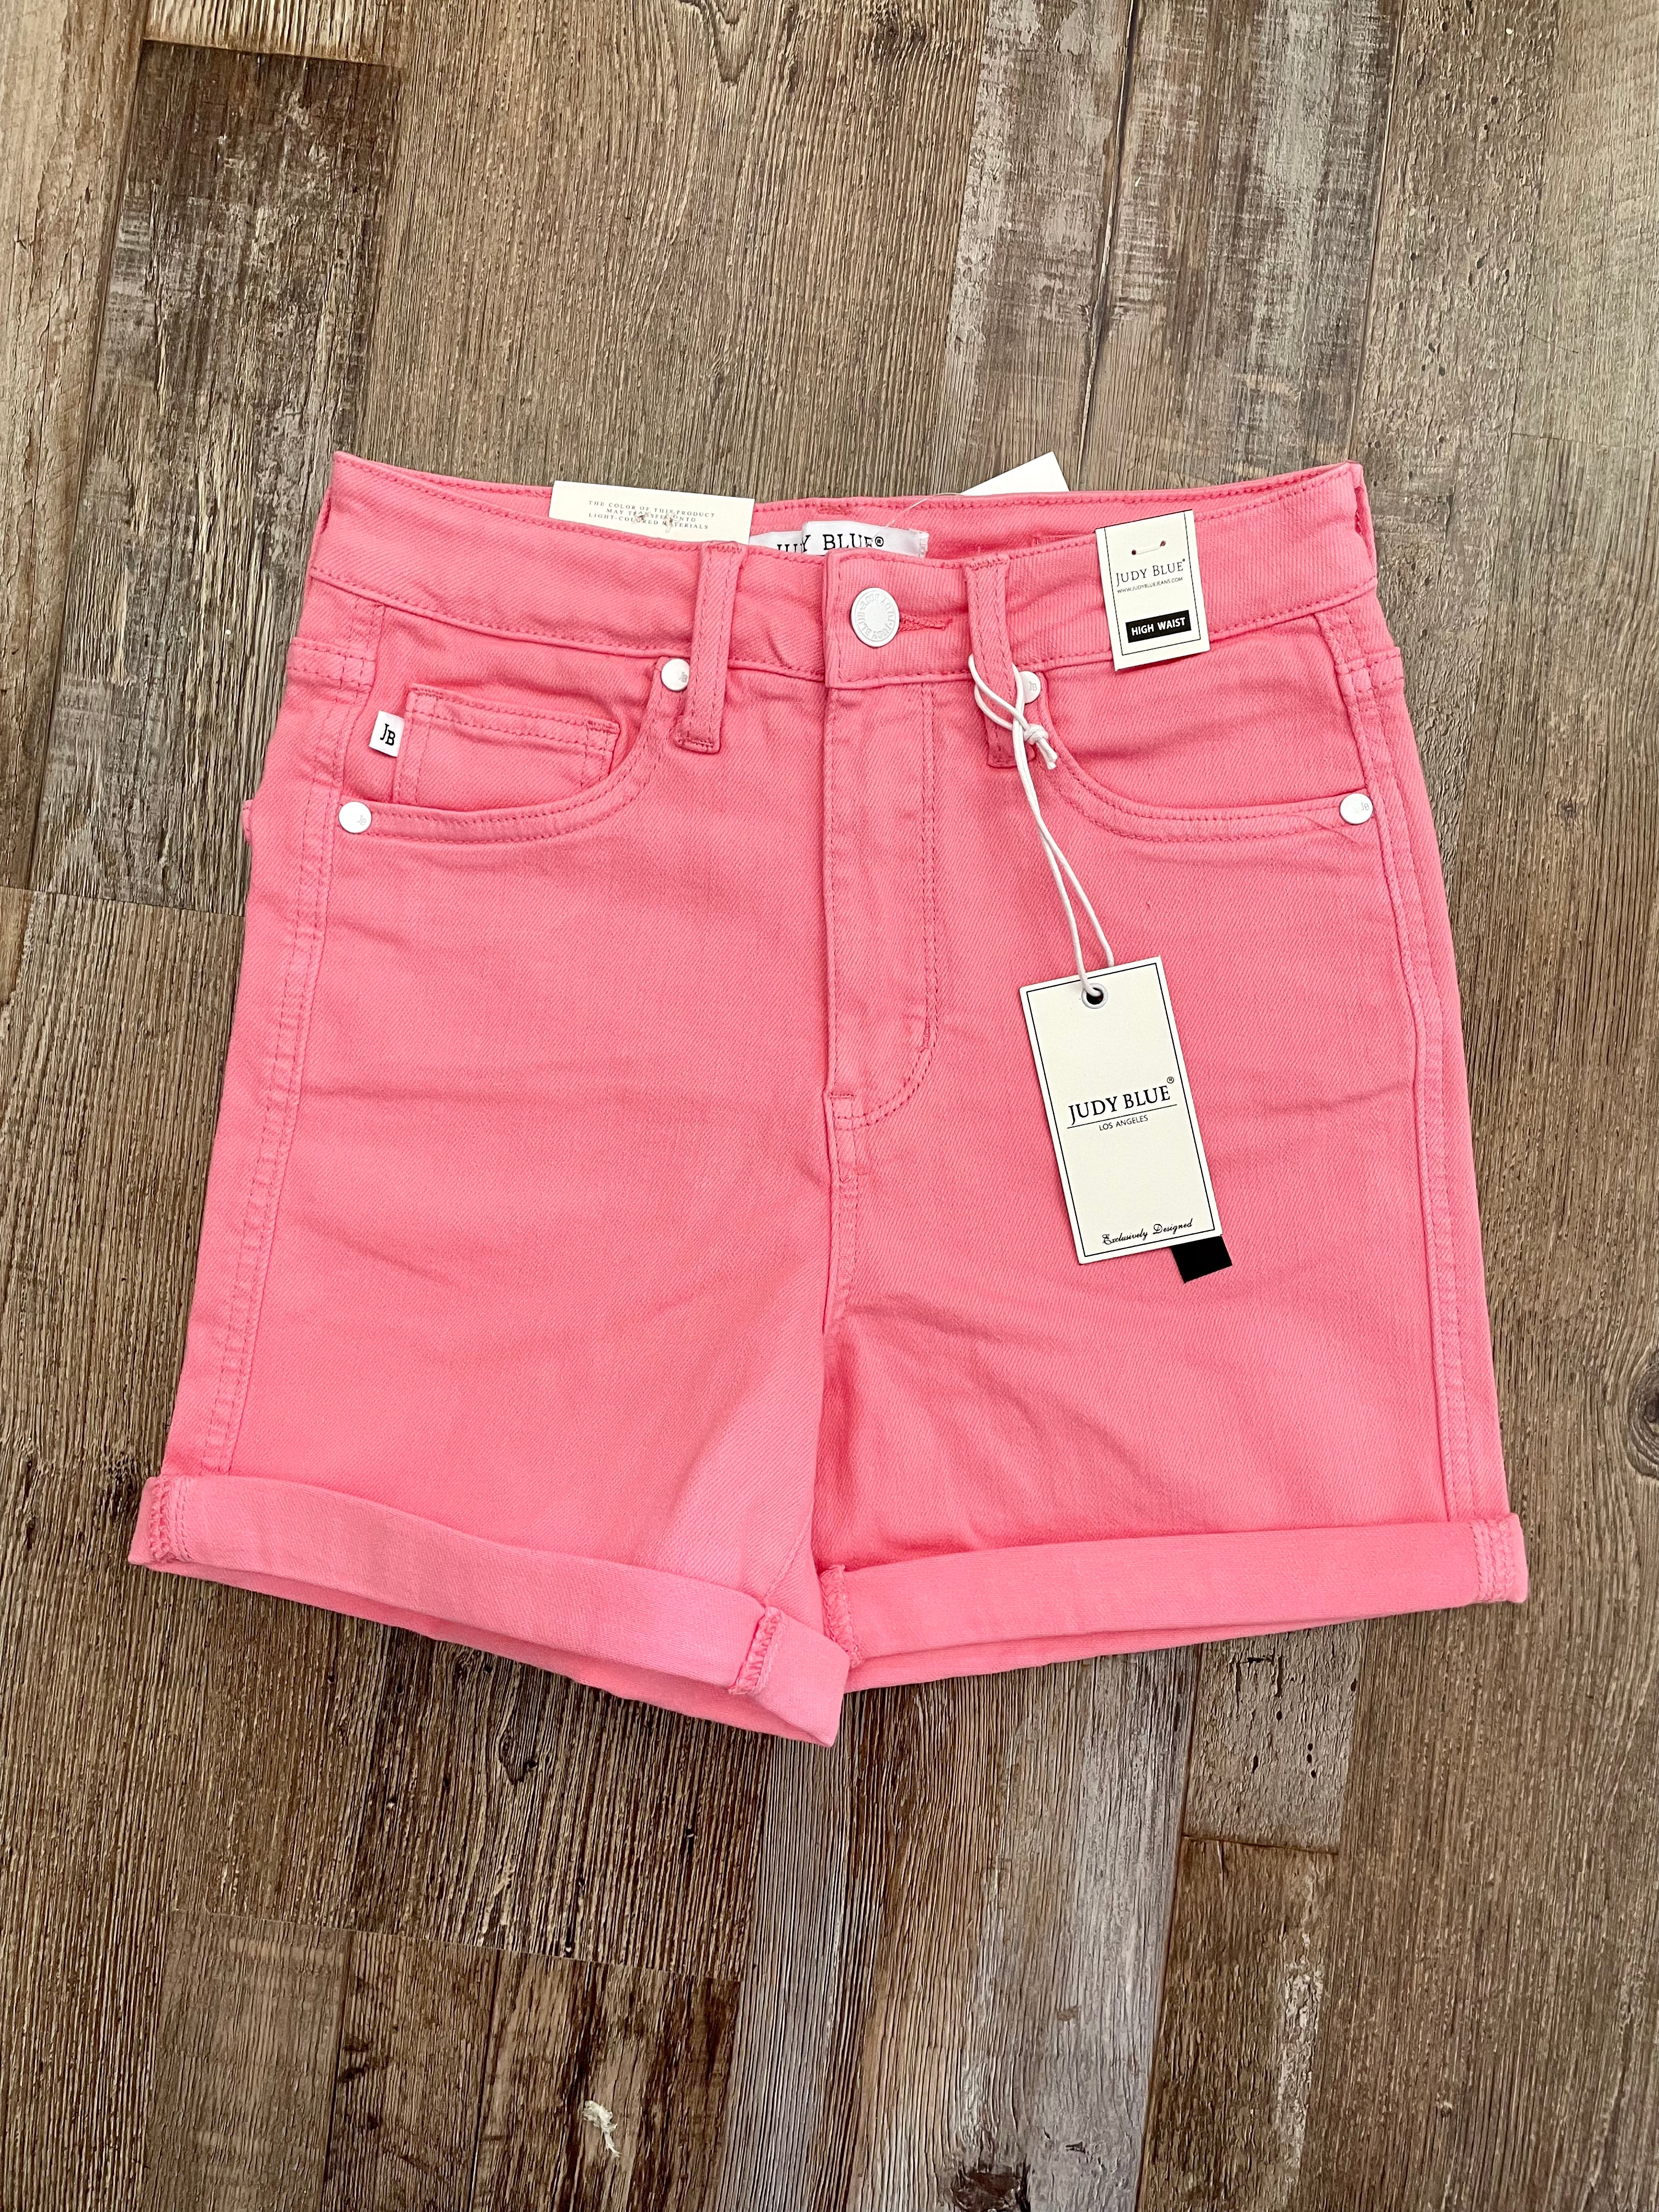 JB Pink Shorts